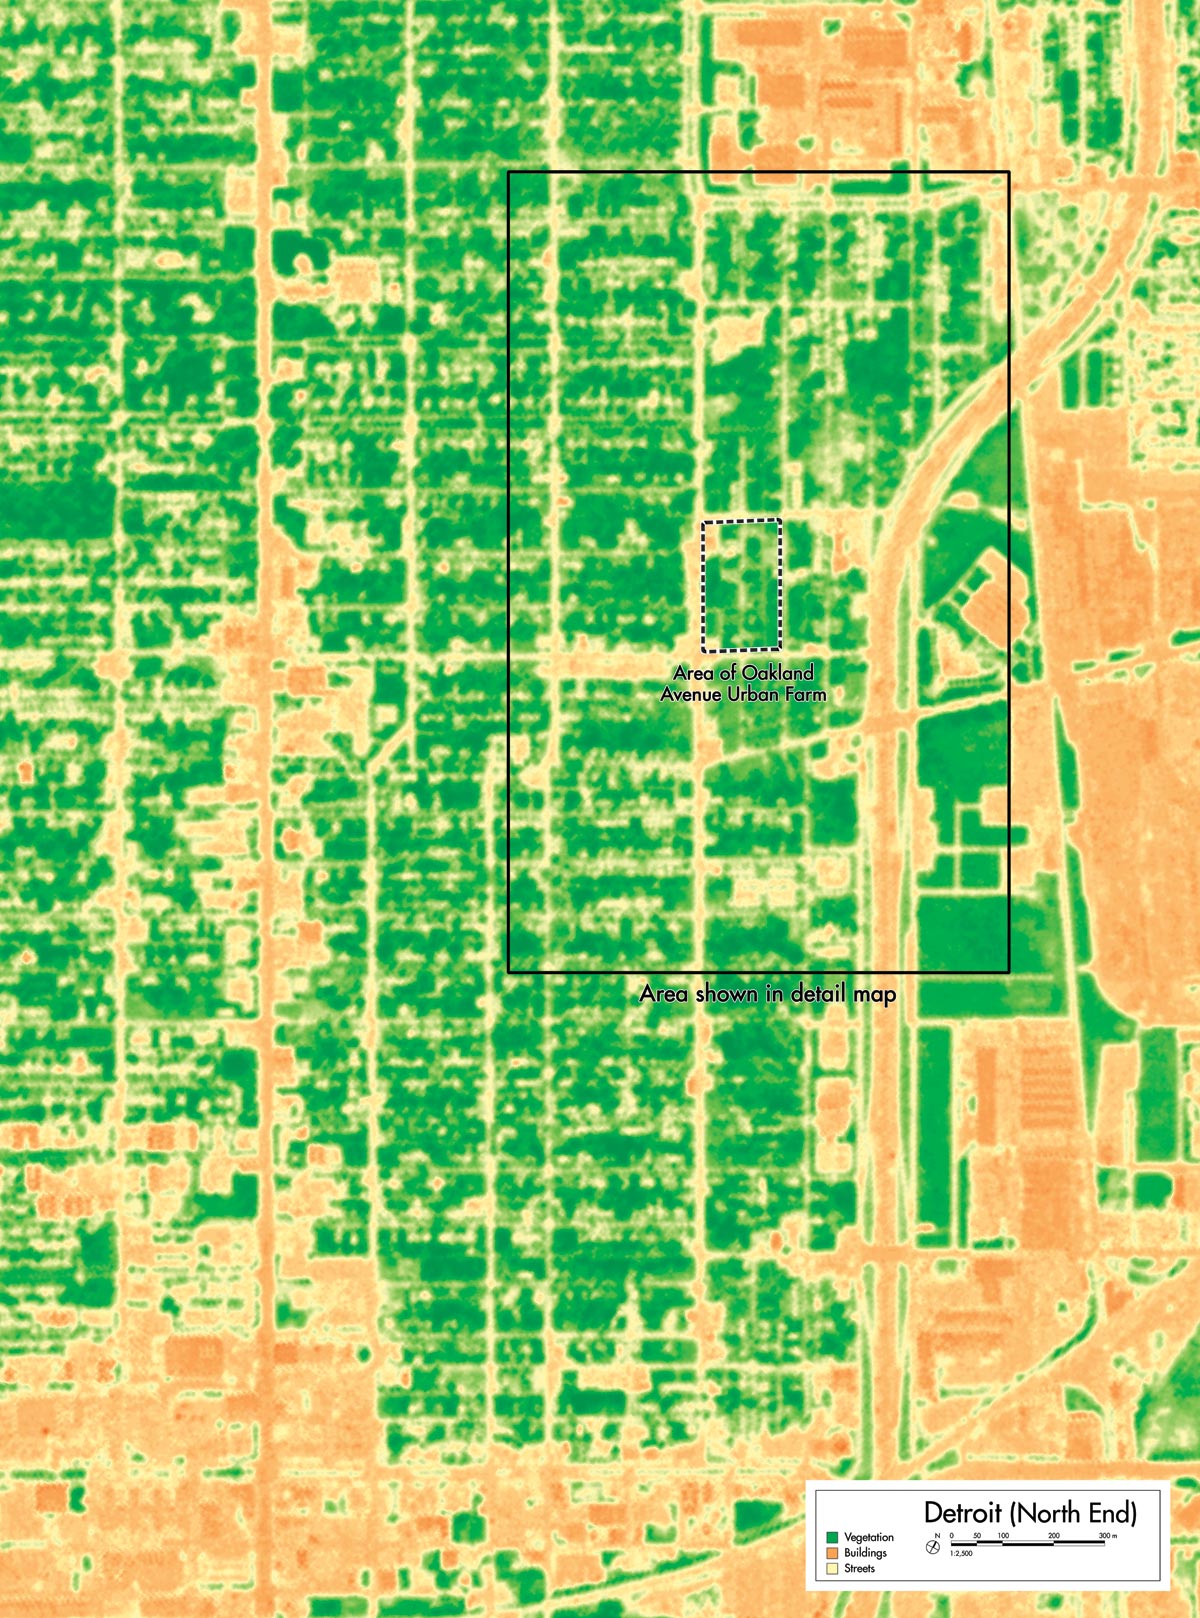 Multispectral satellite image of Detroit’s North End